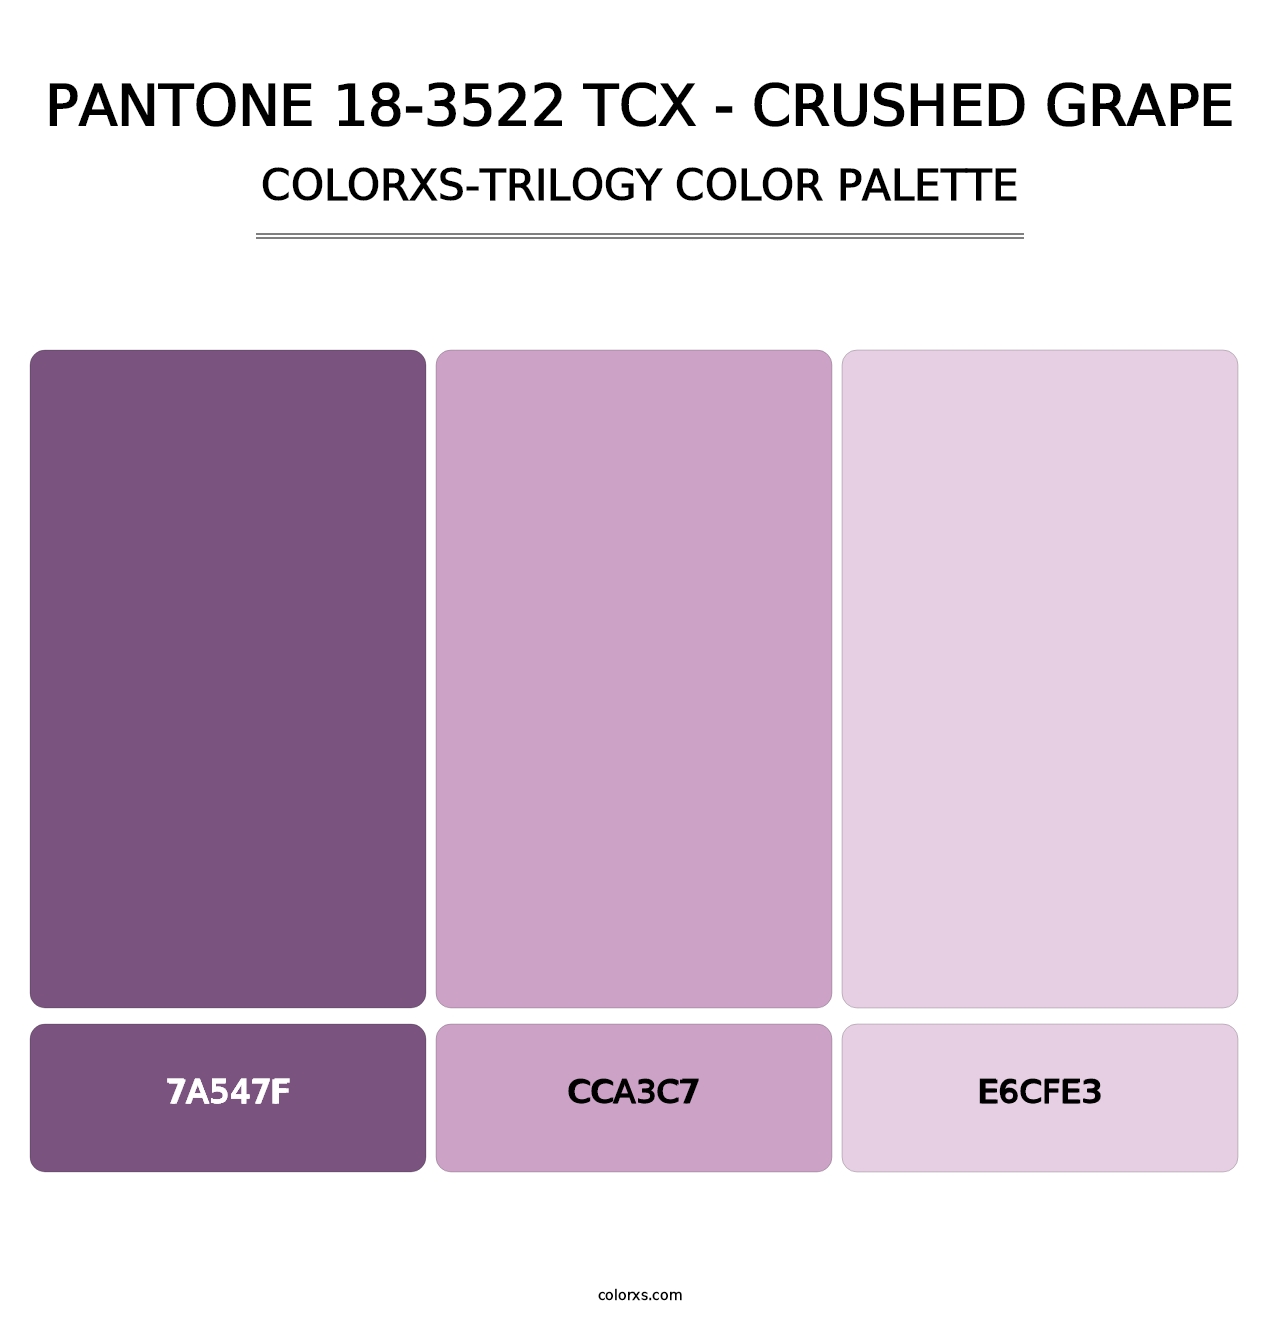 PANTONE 18-3522 TCX - Crushed Grape - Colorxs Trilogy Palette